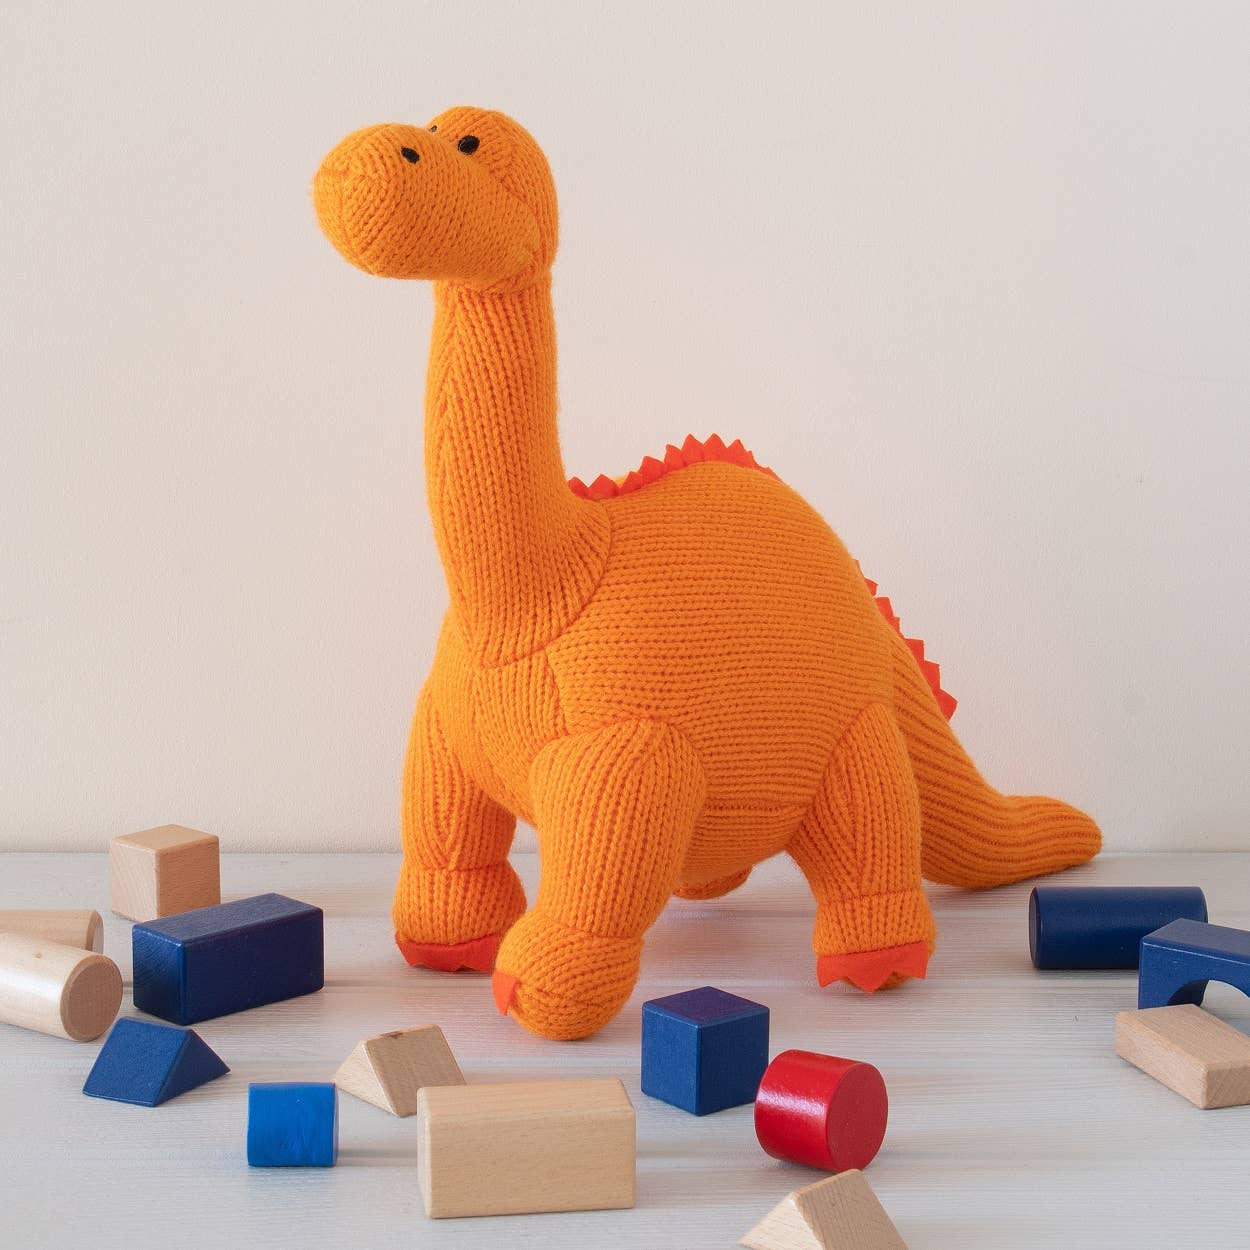 Best Years Ltd - Knitted Orange Diplodocus Dinosaur Plush Toy